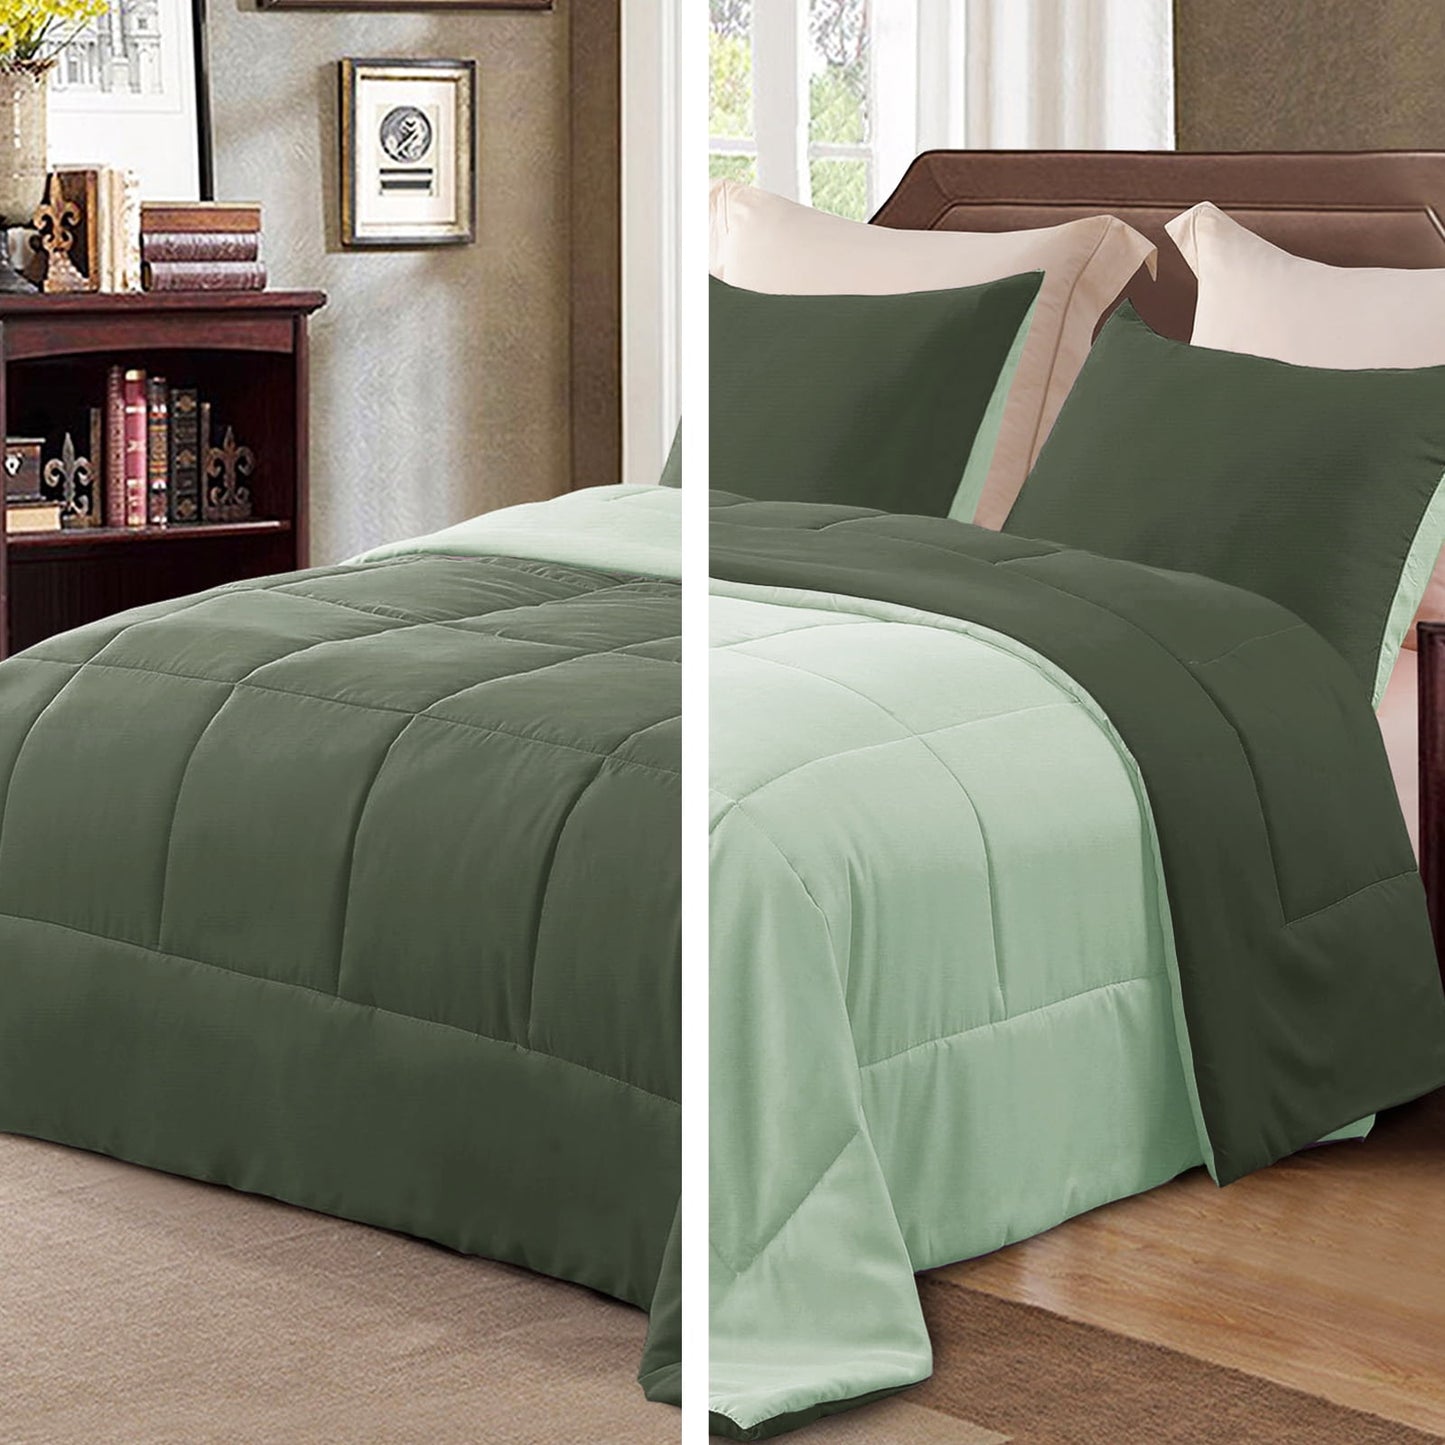 Exclusivo Mezcla Lightweight Reversible 3-Piece Comforter Set All Seasons, Down Alternative Comforter with 2 Pillow Shams, Queen Size, Emerald/Mint